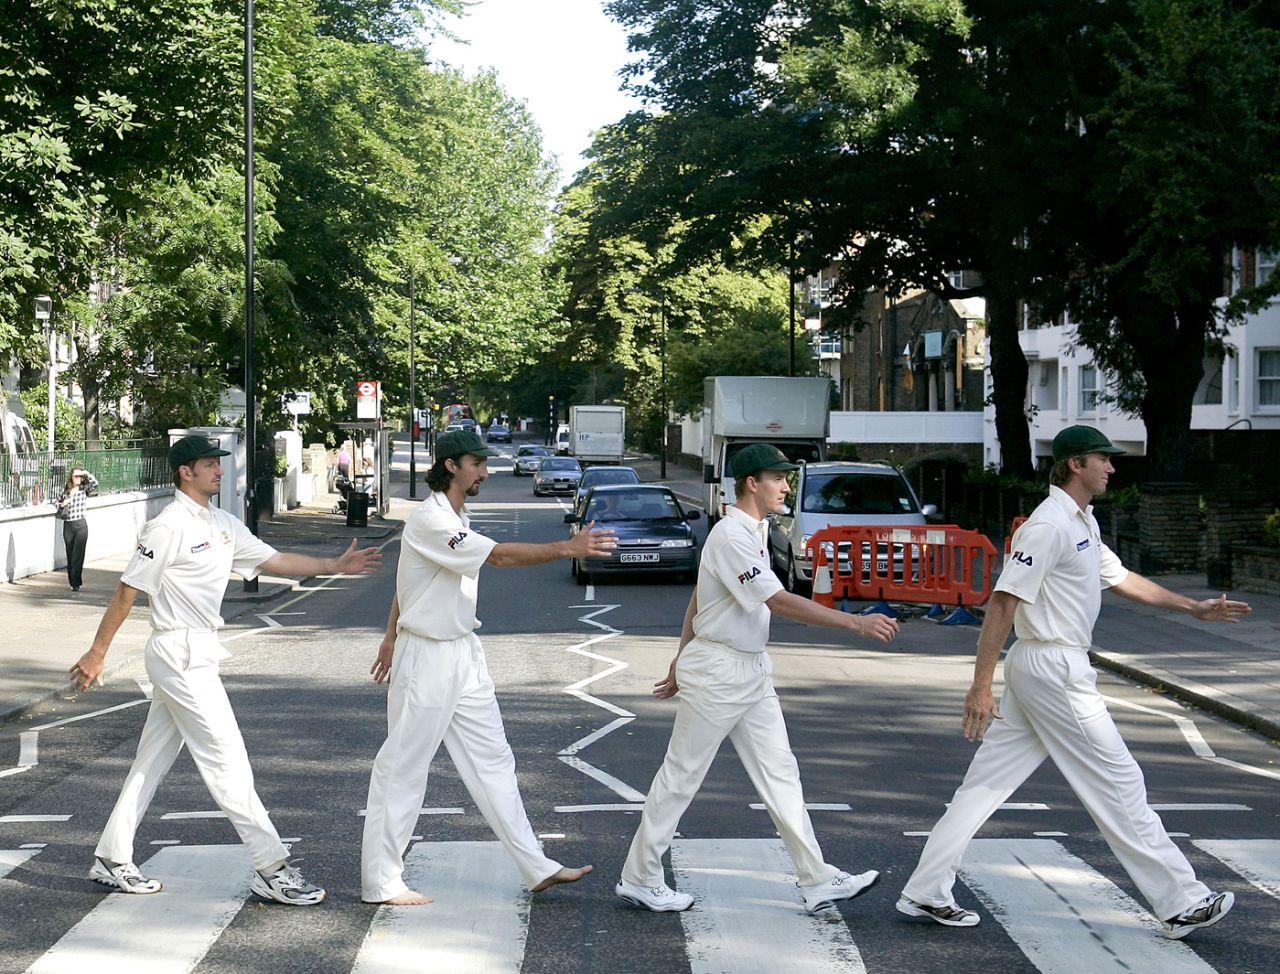 Michael Kasprowicz, Jason Gillespie, Brett Lee and Glenn McGrath of Australia re-enact the famous Beatles album cover at Abbey Road, London, July 19, 2005